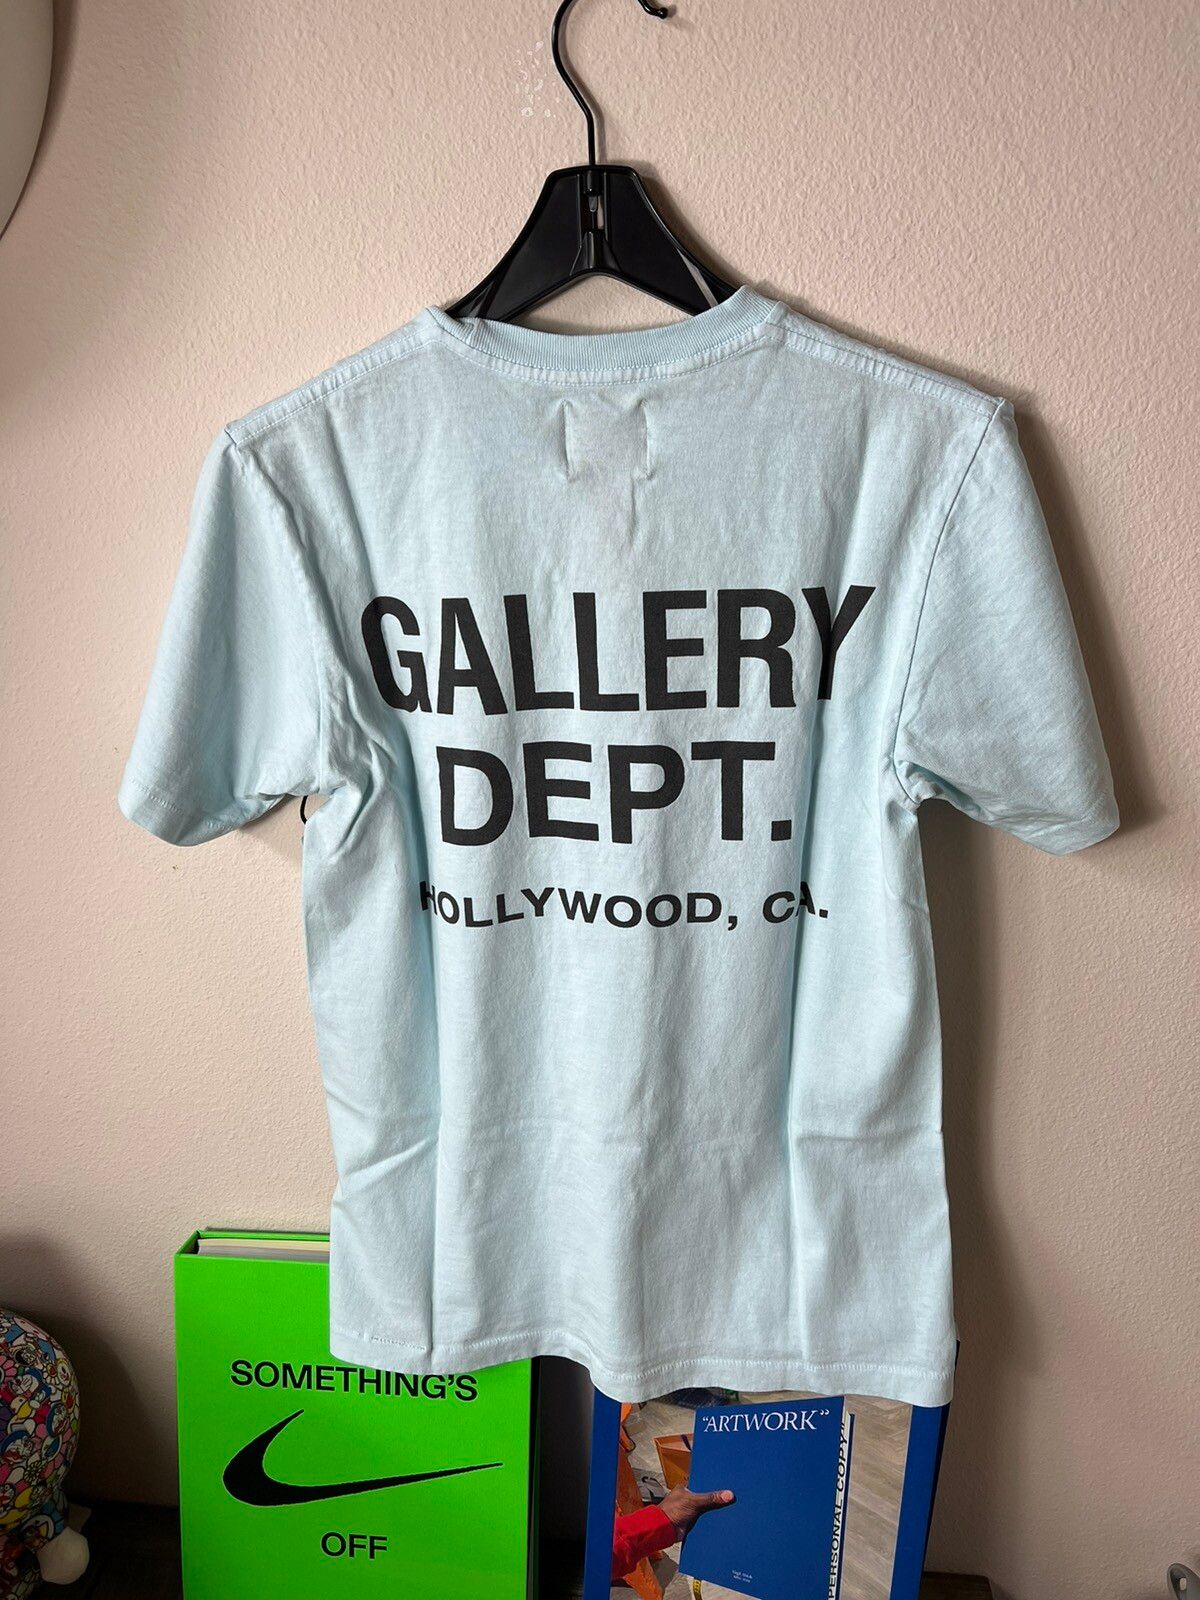 Gallery Dept. Vintage Souvenir T-Shirt Yellow